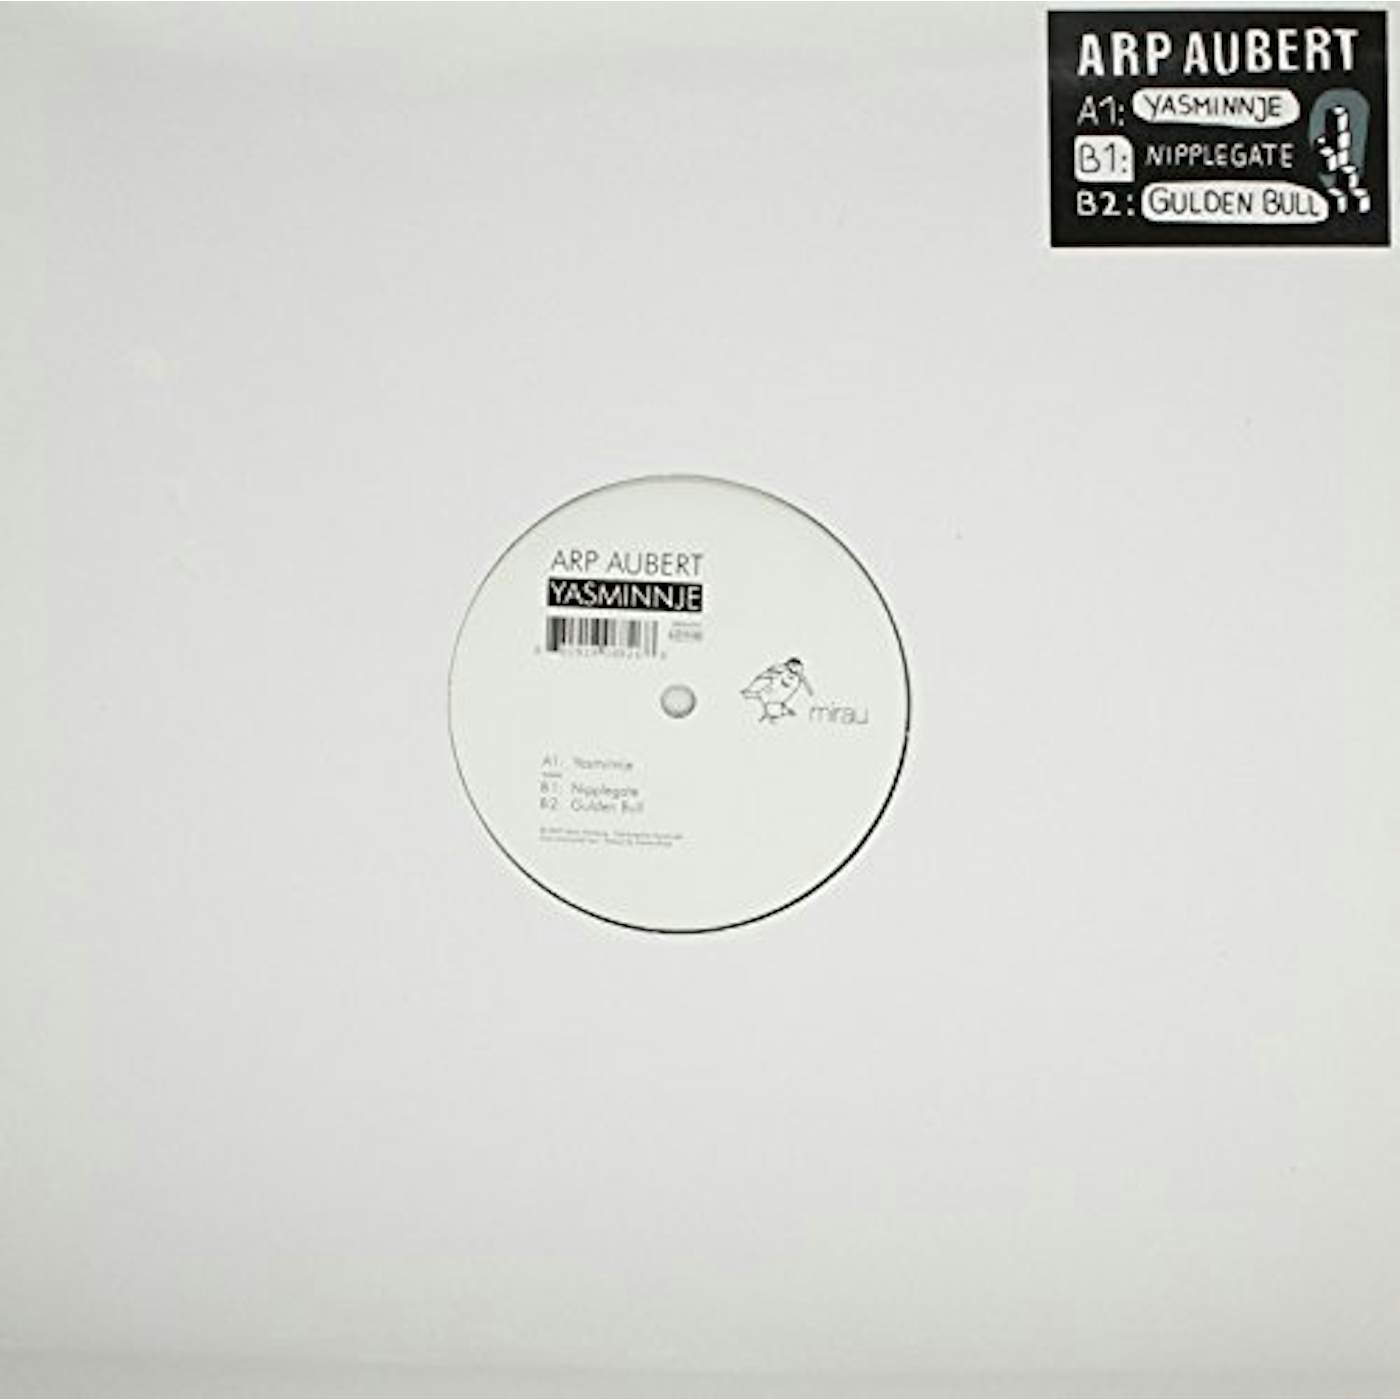 Arp Aubert Yasminnje Vinyl Record